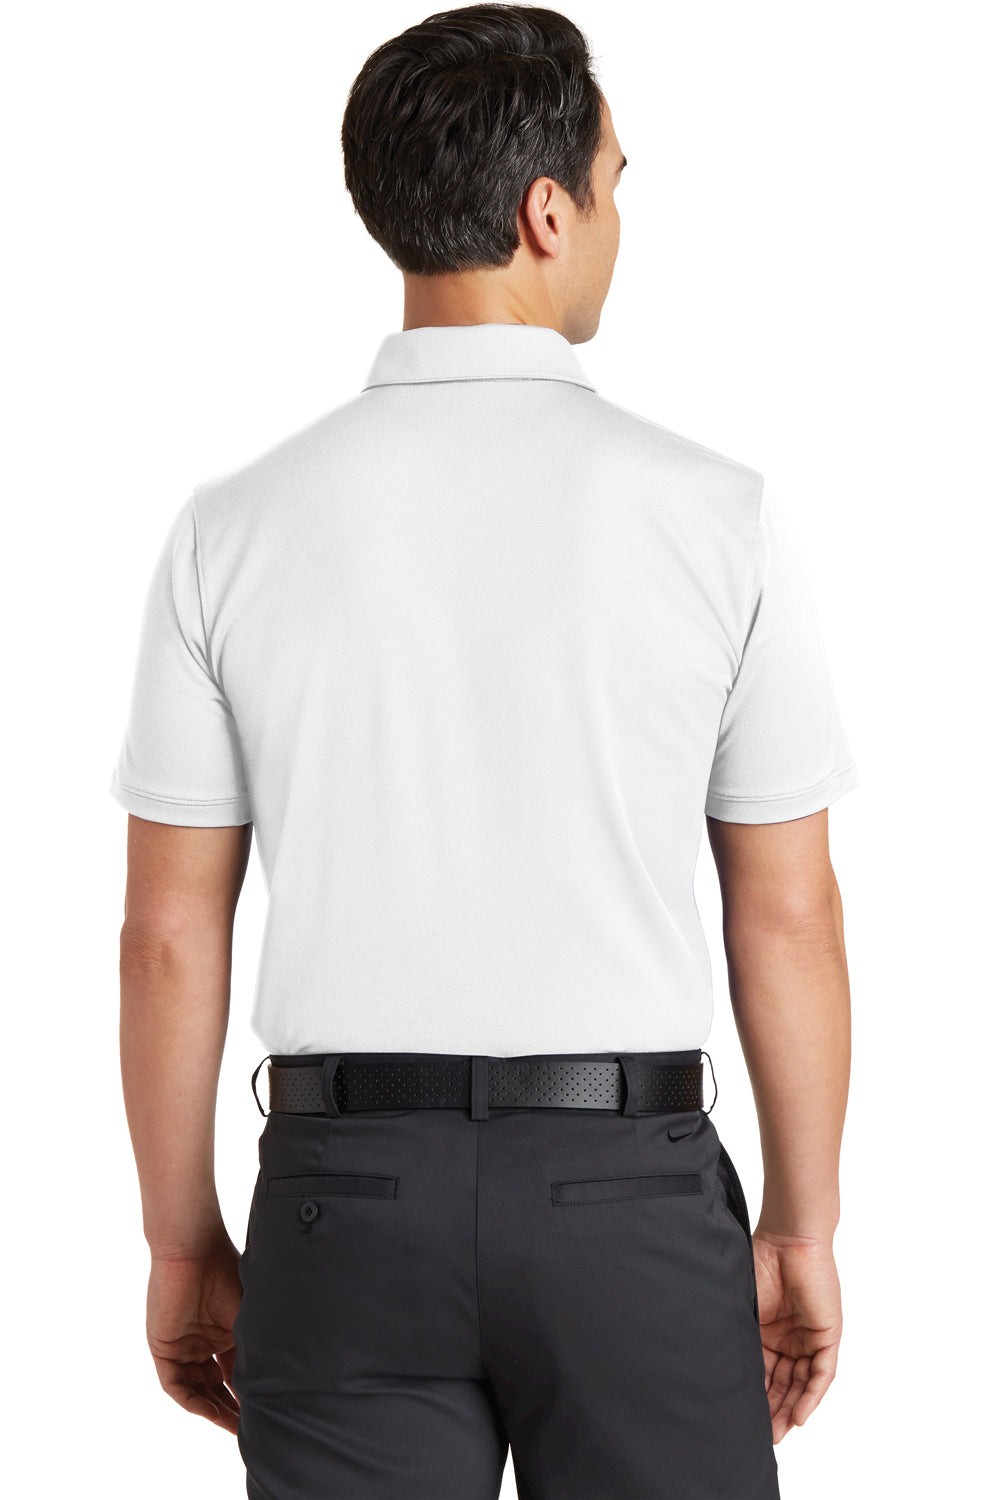 Nike 746099 Mens Icon Dri-Fit Moisture Wicking Short Sleeve Polo Shirt White Model Back